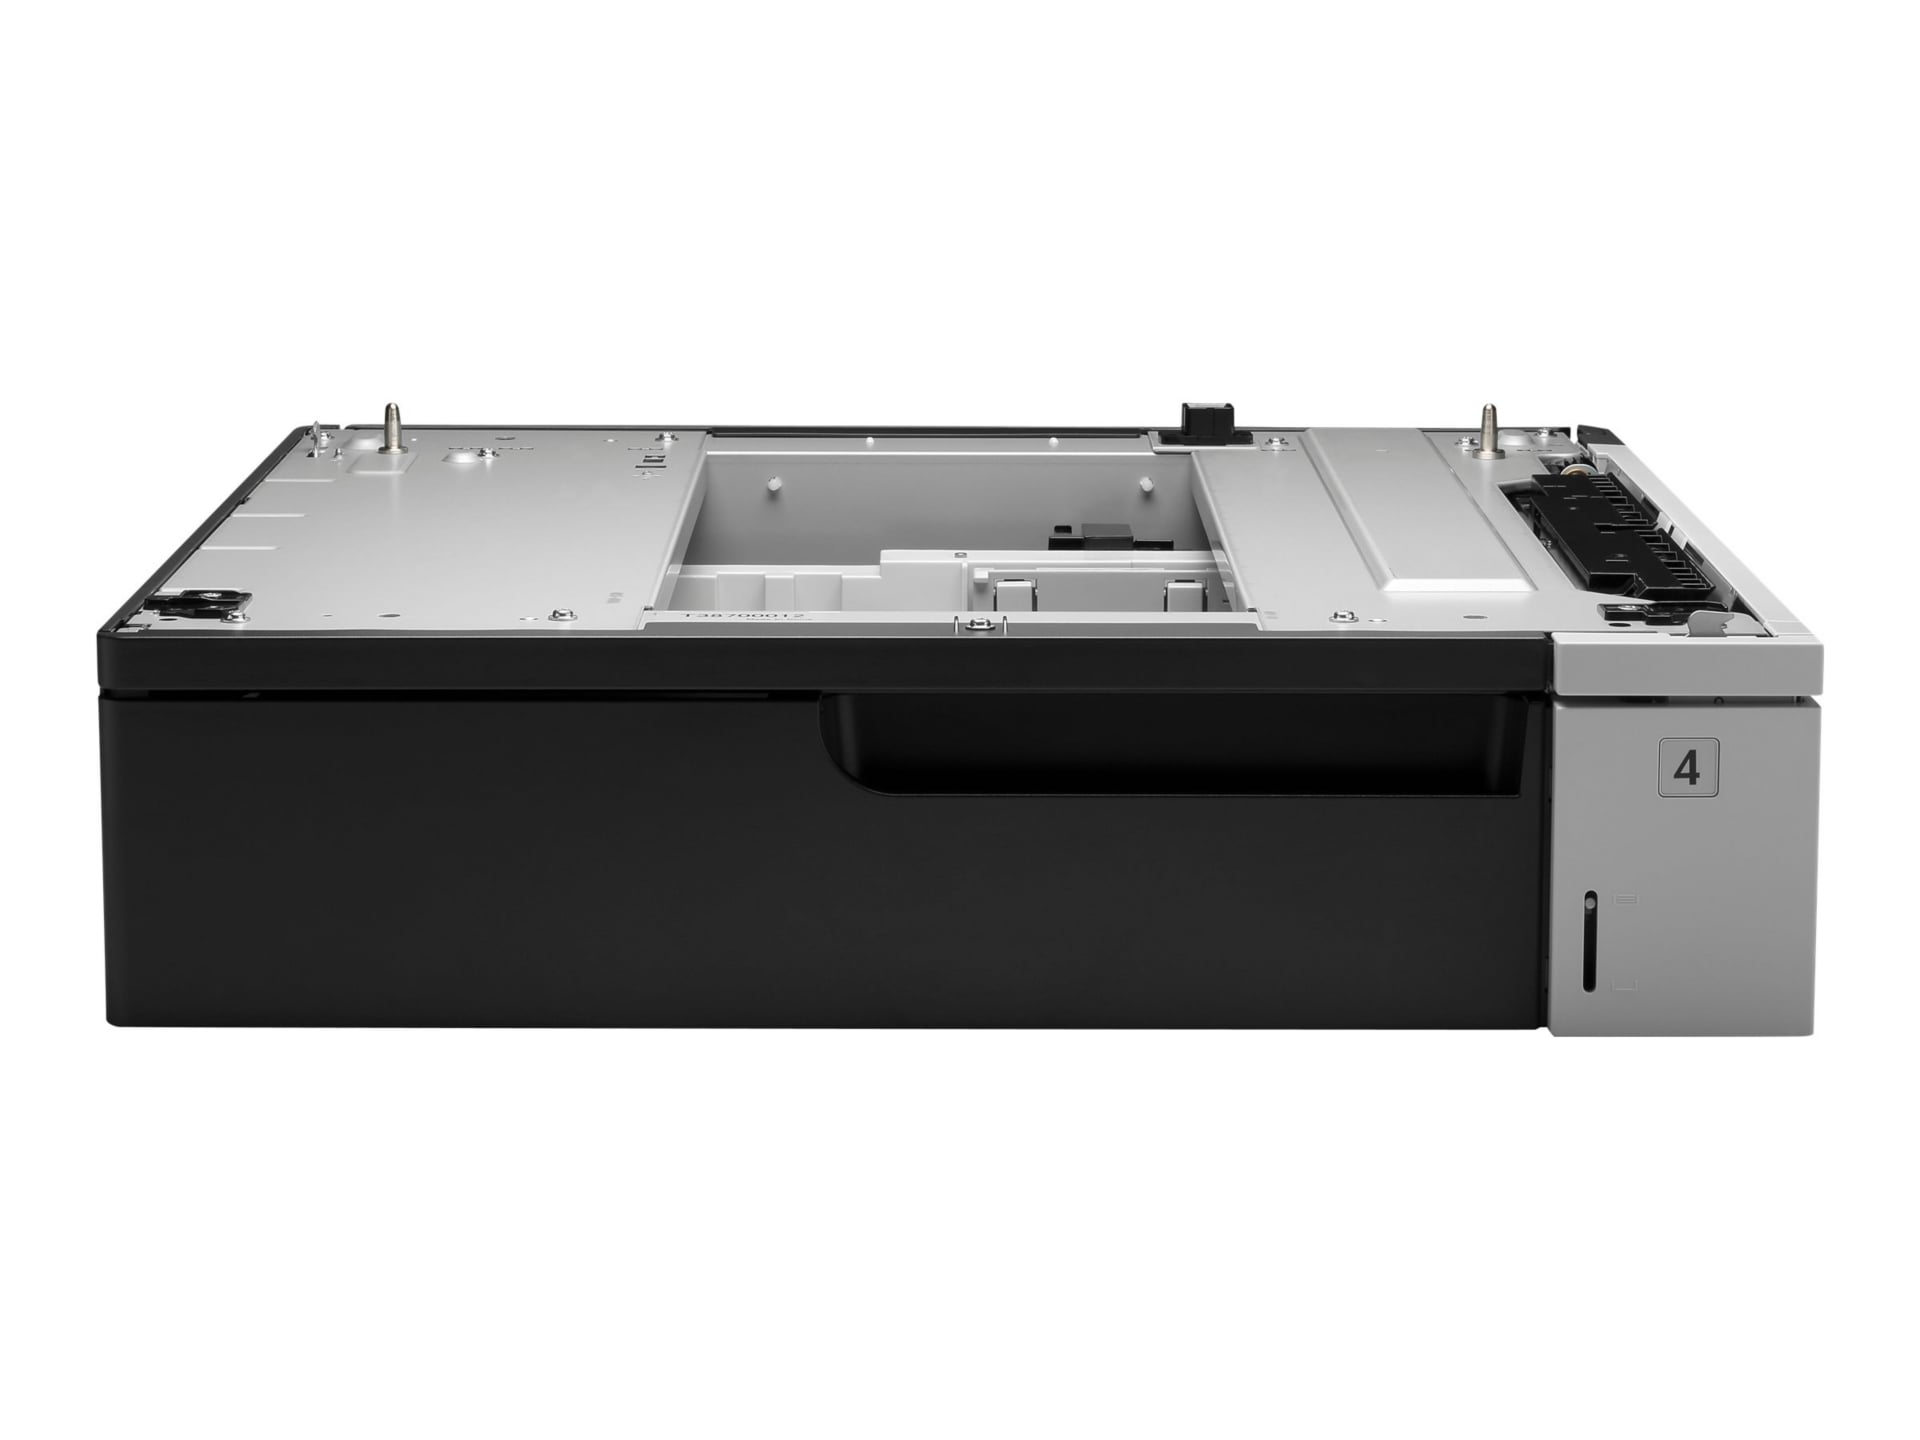 HP HP LaserJet 500-sheet Feeder and Tray